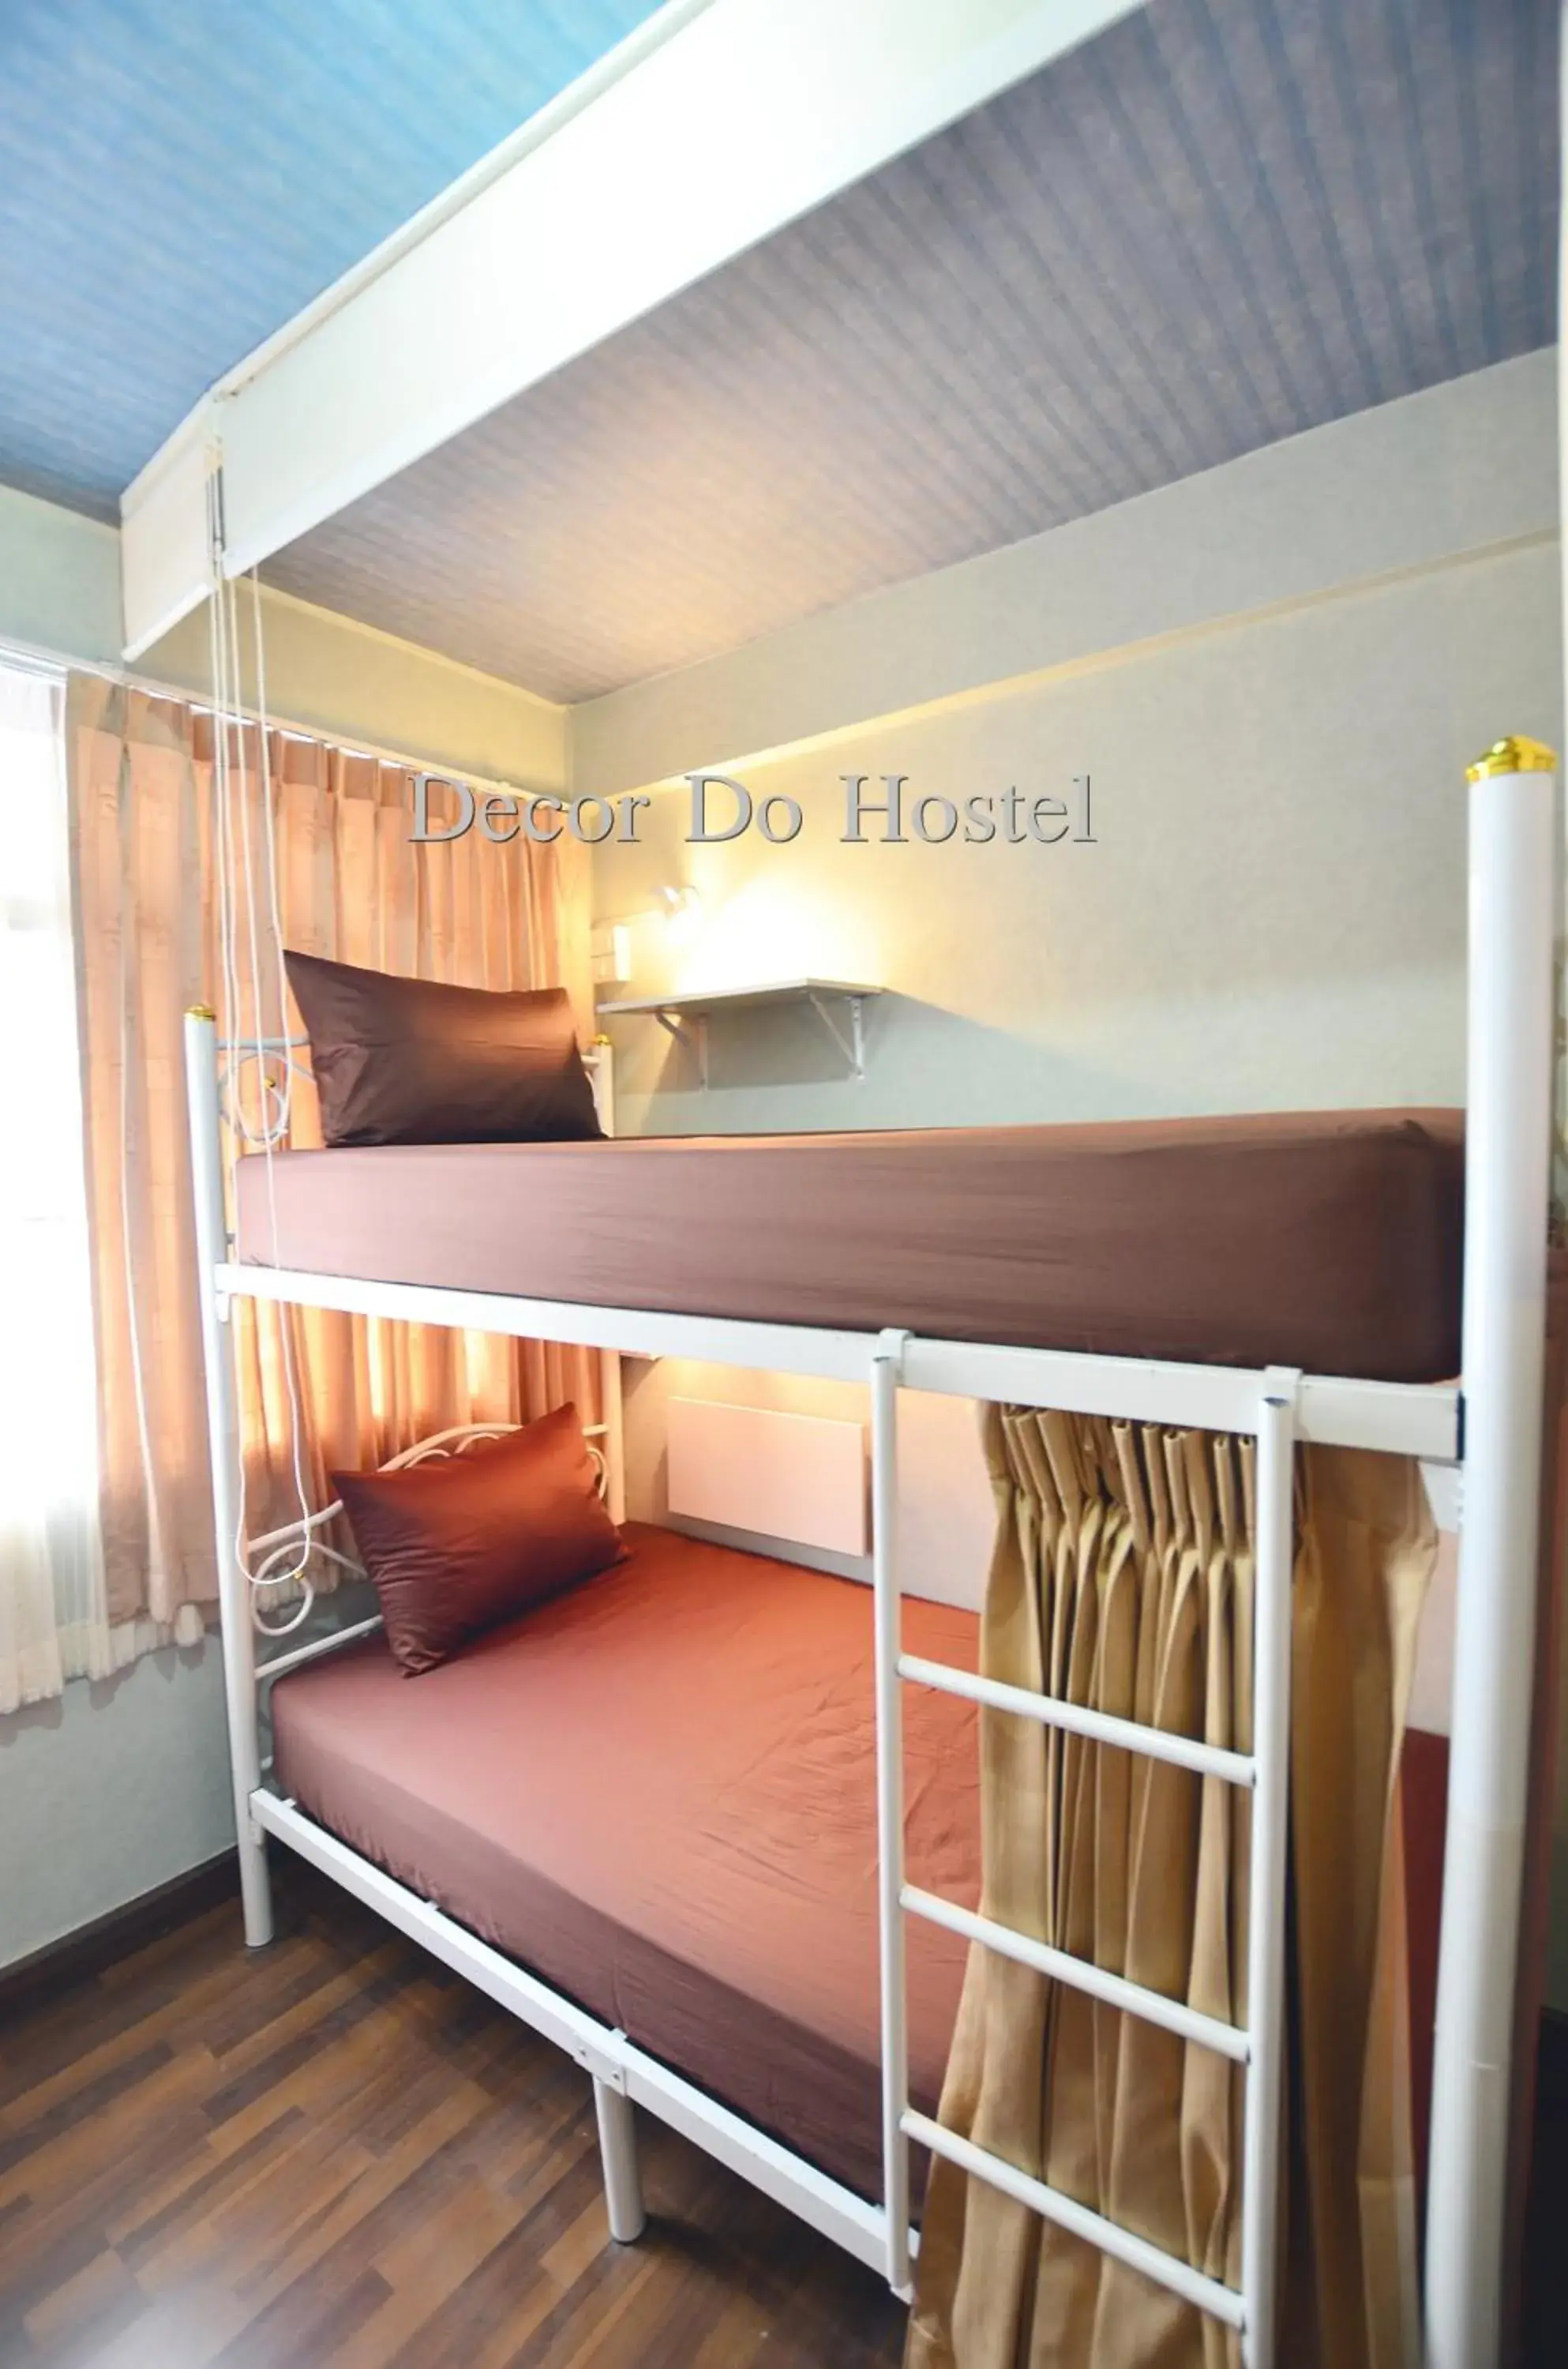 Bedroom, Bunk Bed in Decor Do Hostel